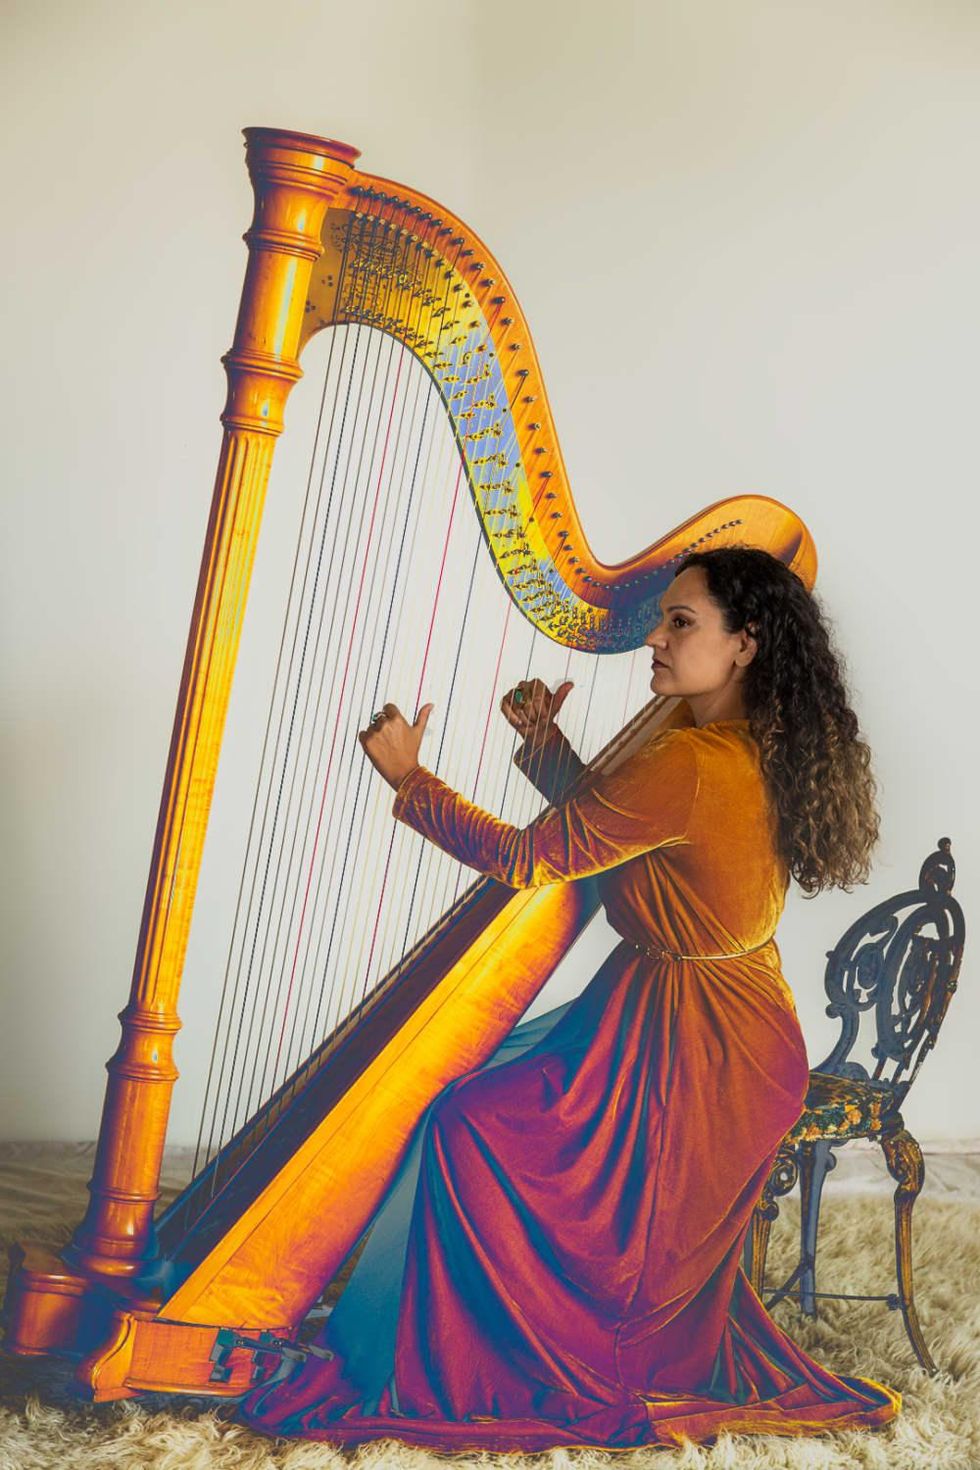 Pamela Martinez plays the harp.